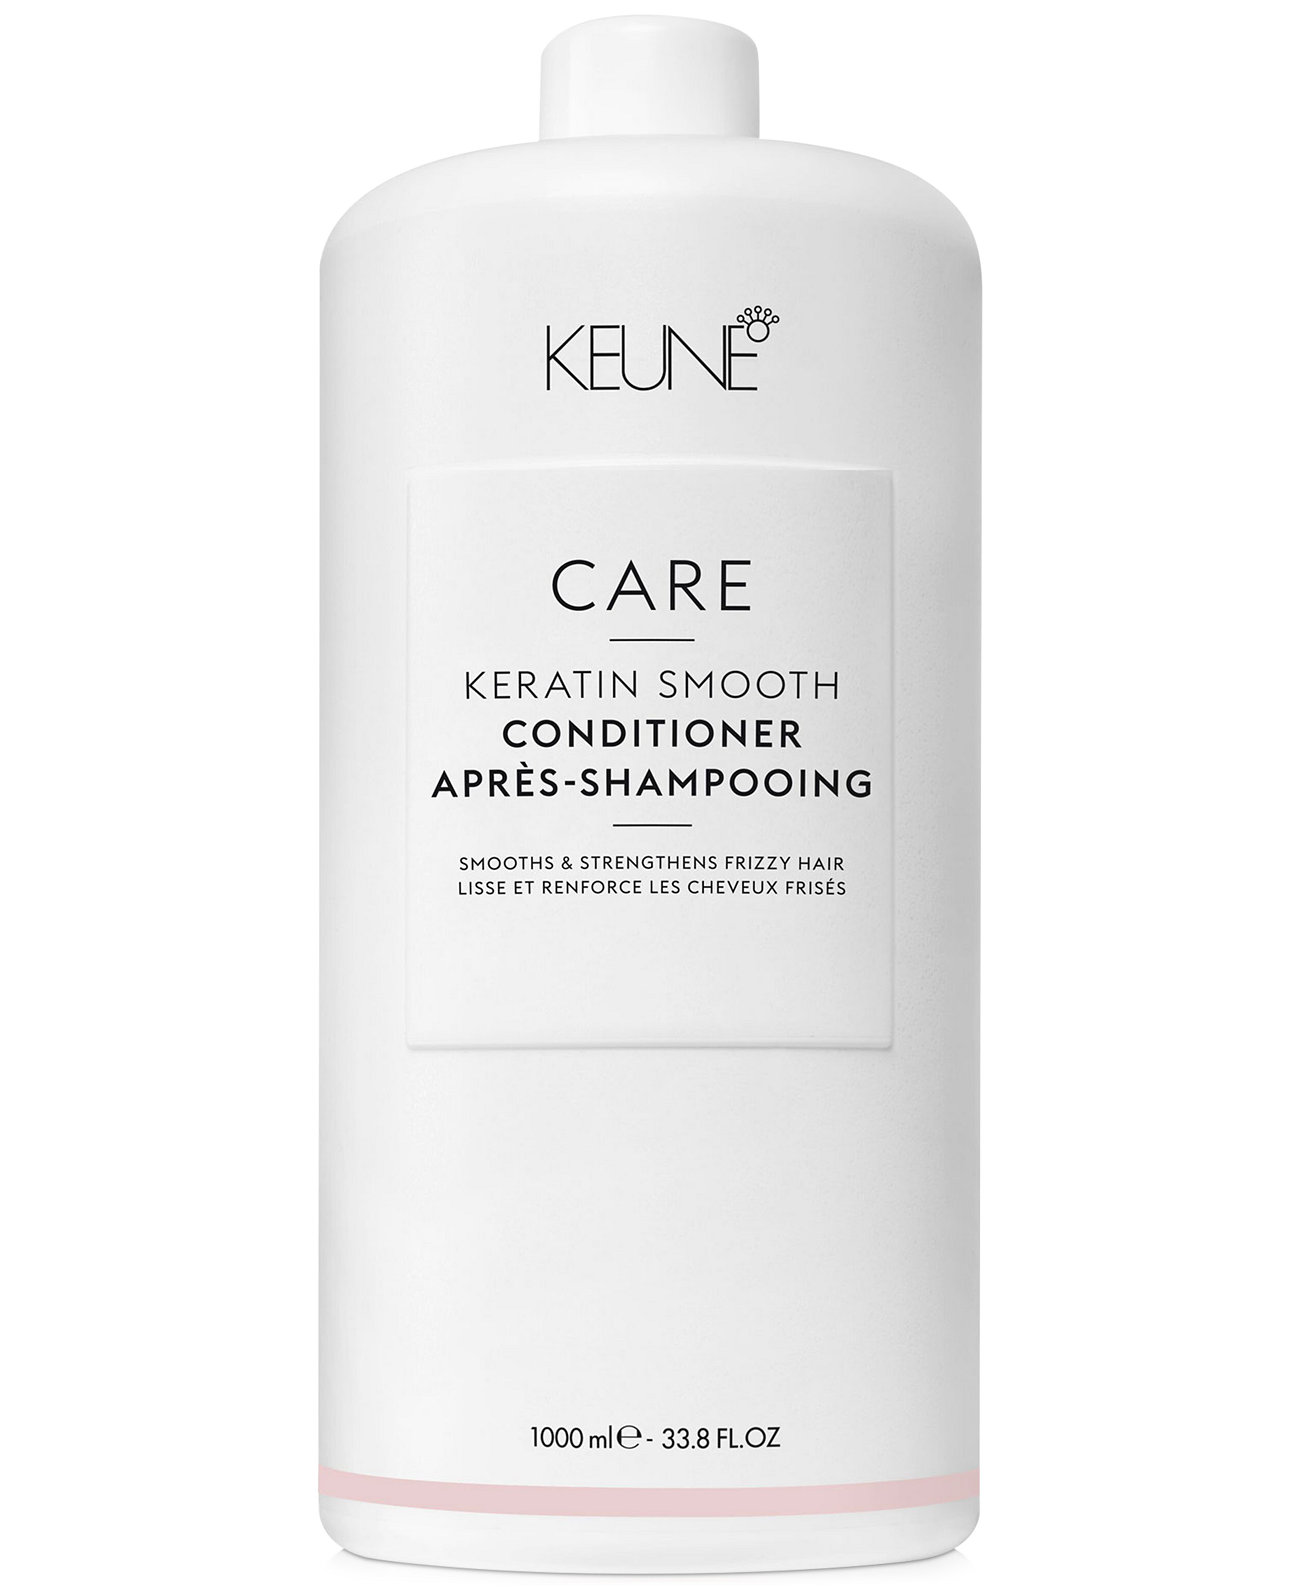 Кондиционер Care Keratin Smooth Conditioner, 33,8 унции, от PUREBEAUTY Salon & Spa Keune